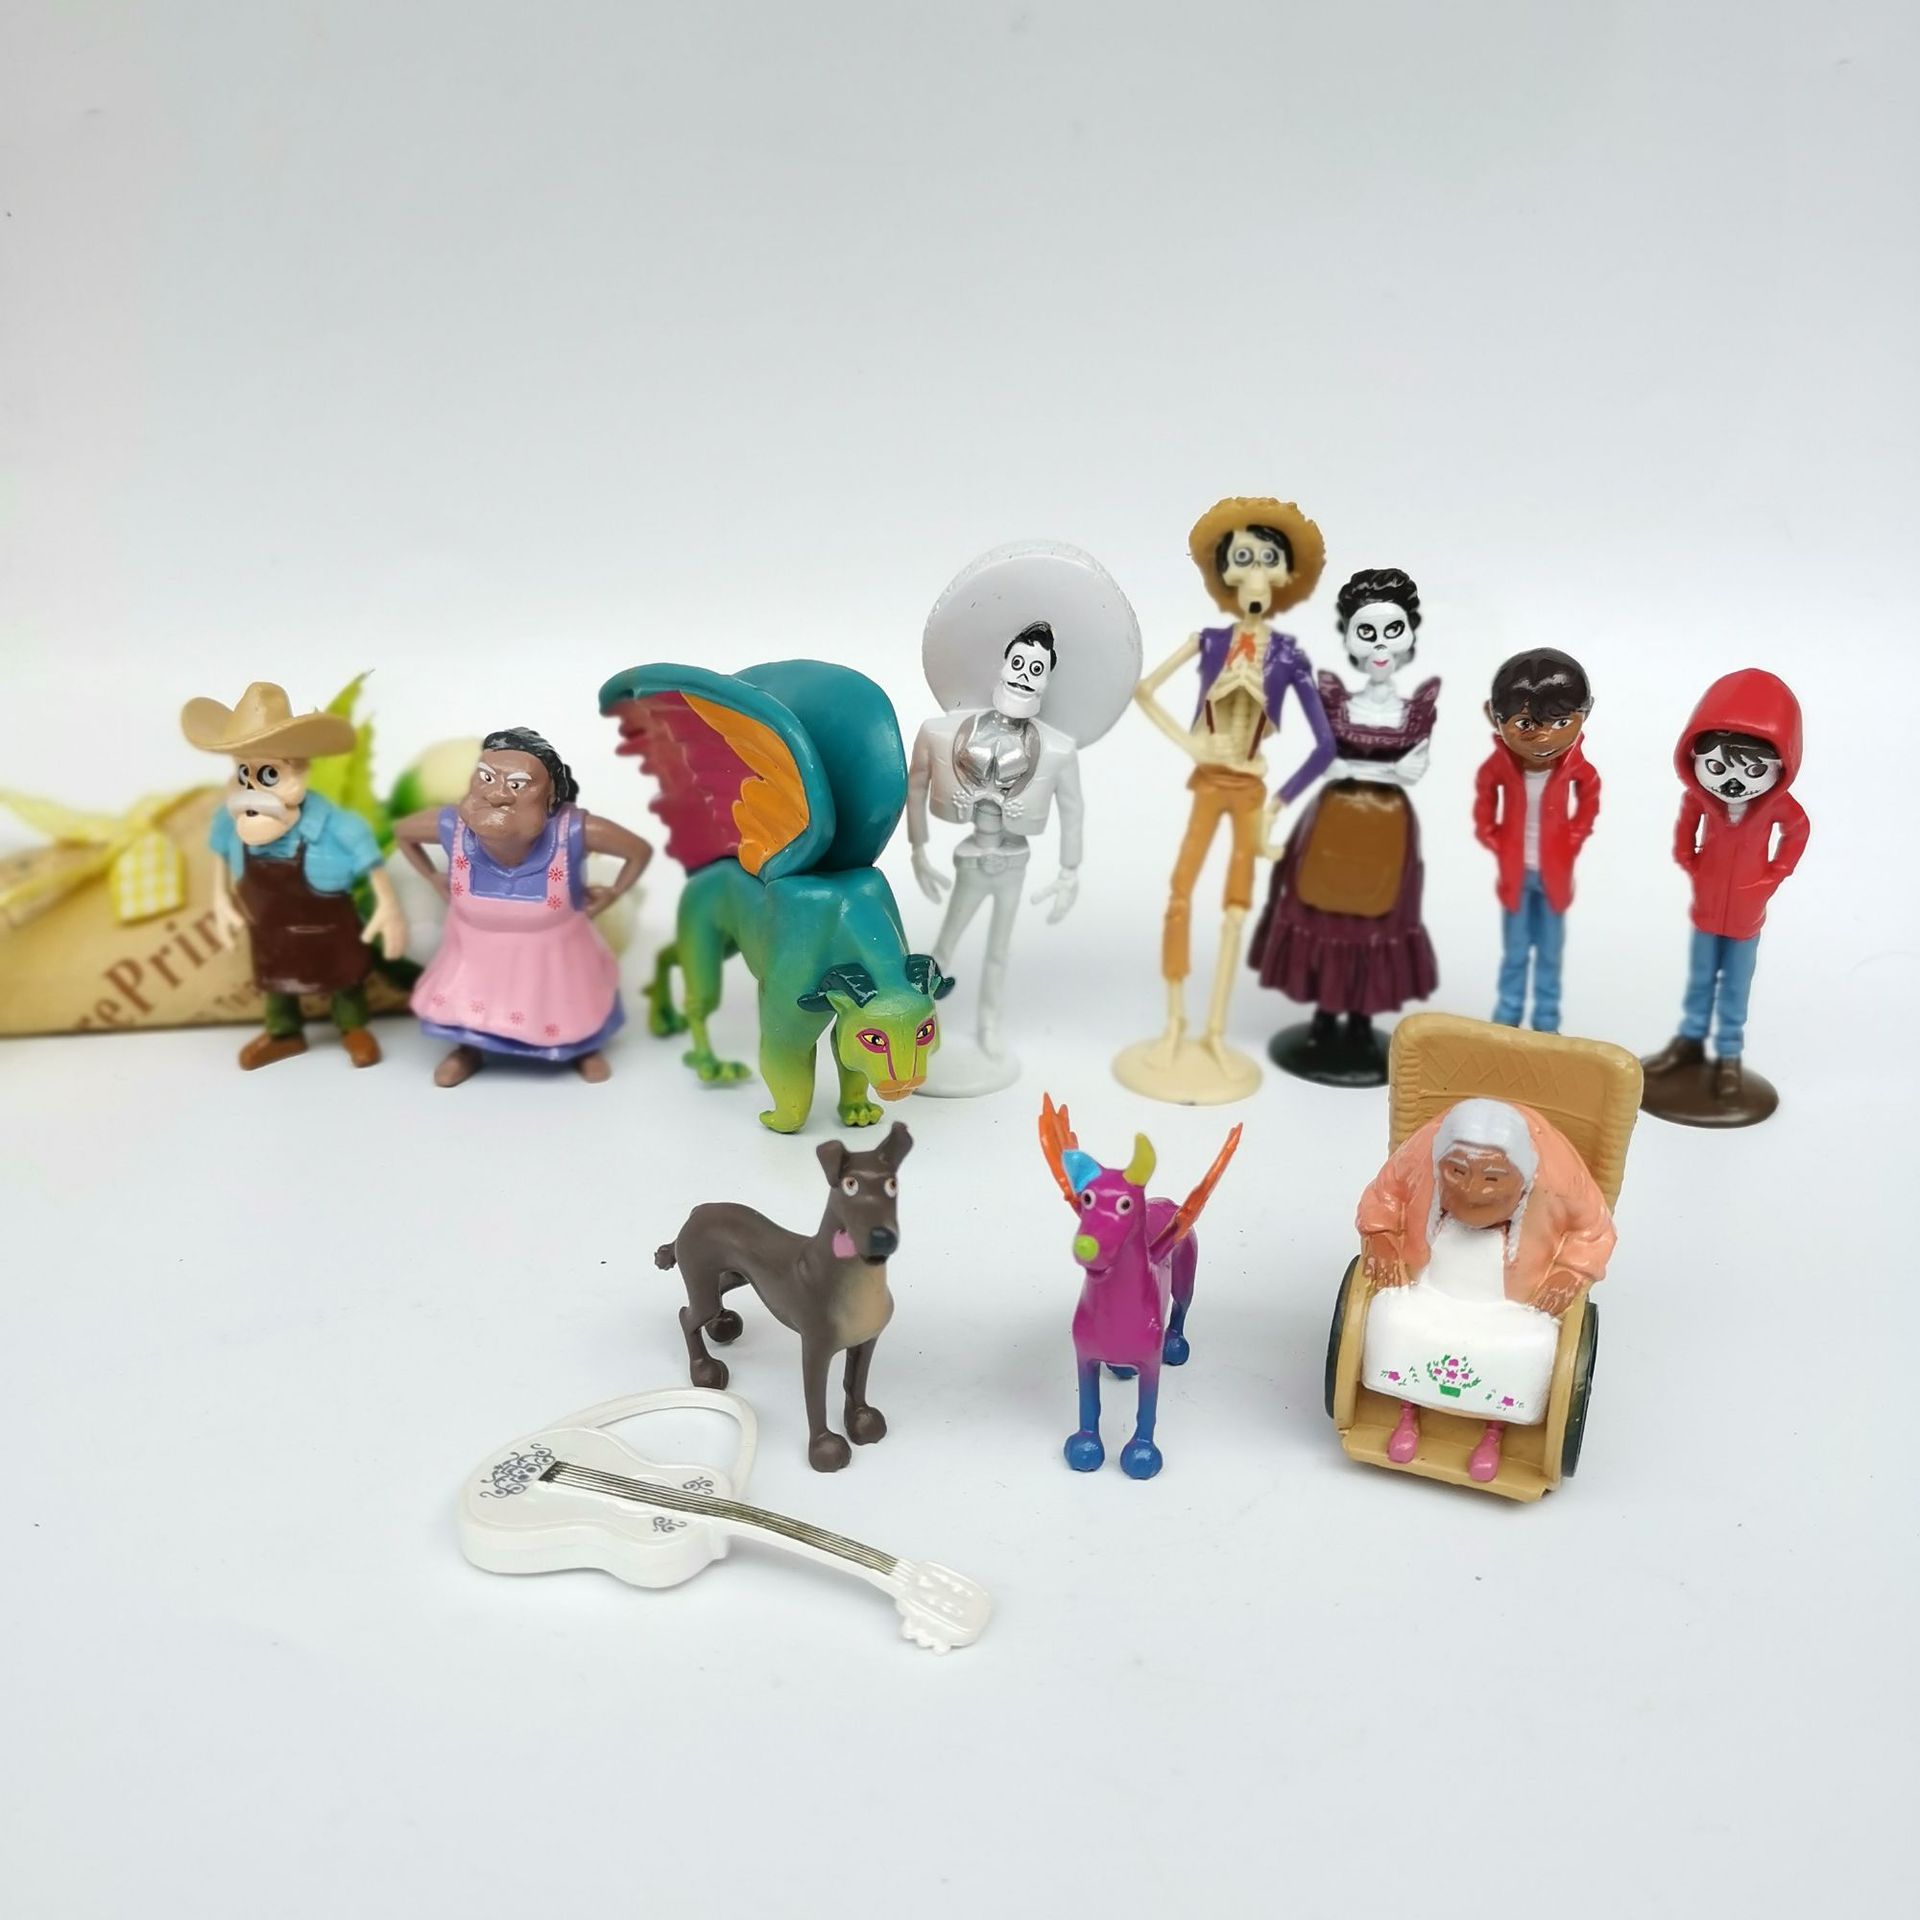 10pcs/set Disney Animated Films Coco Anime Action Figure Model Toy Cartoon Desktop Decor Decoration Collection Toy For Children alx